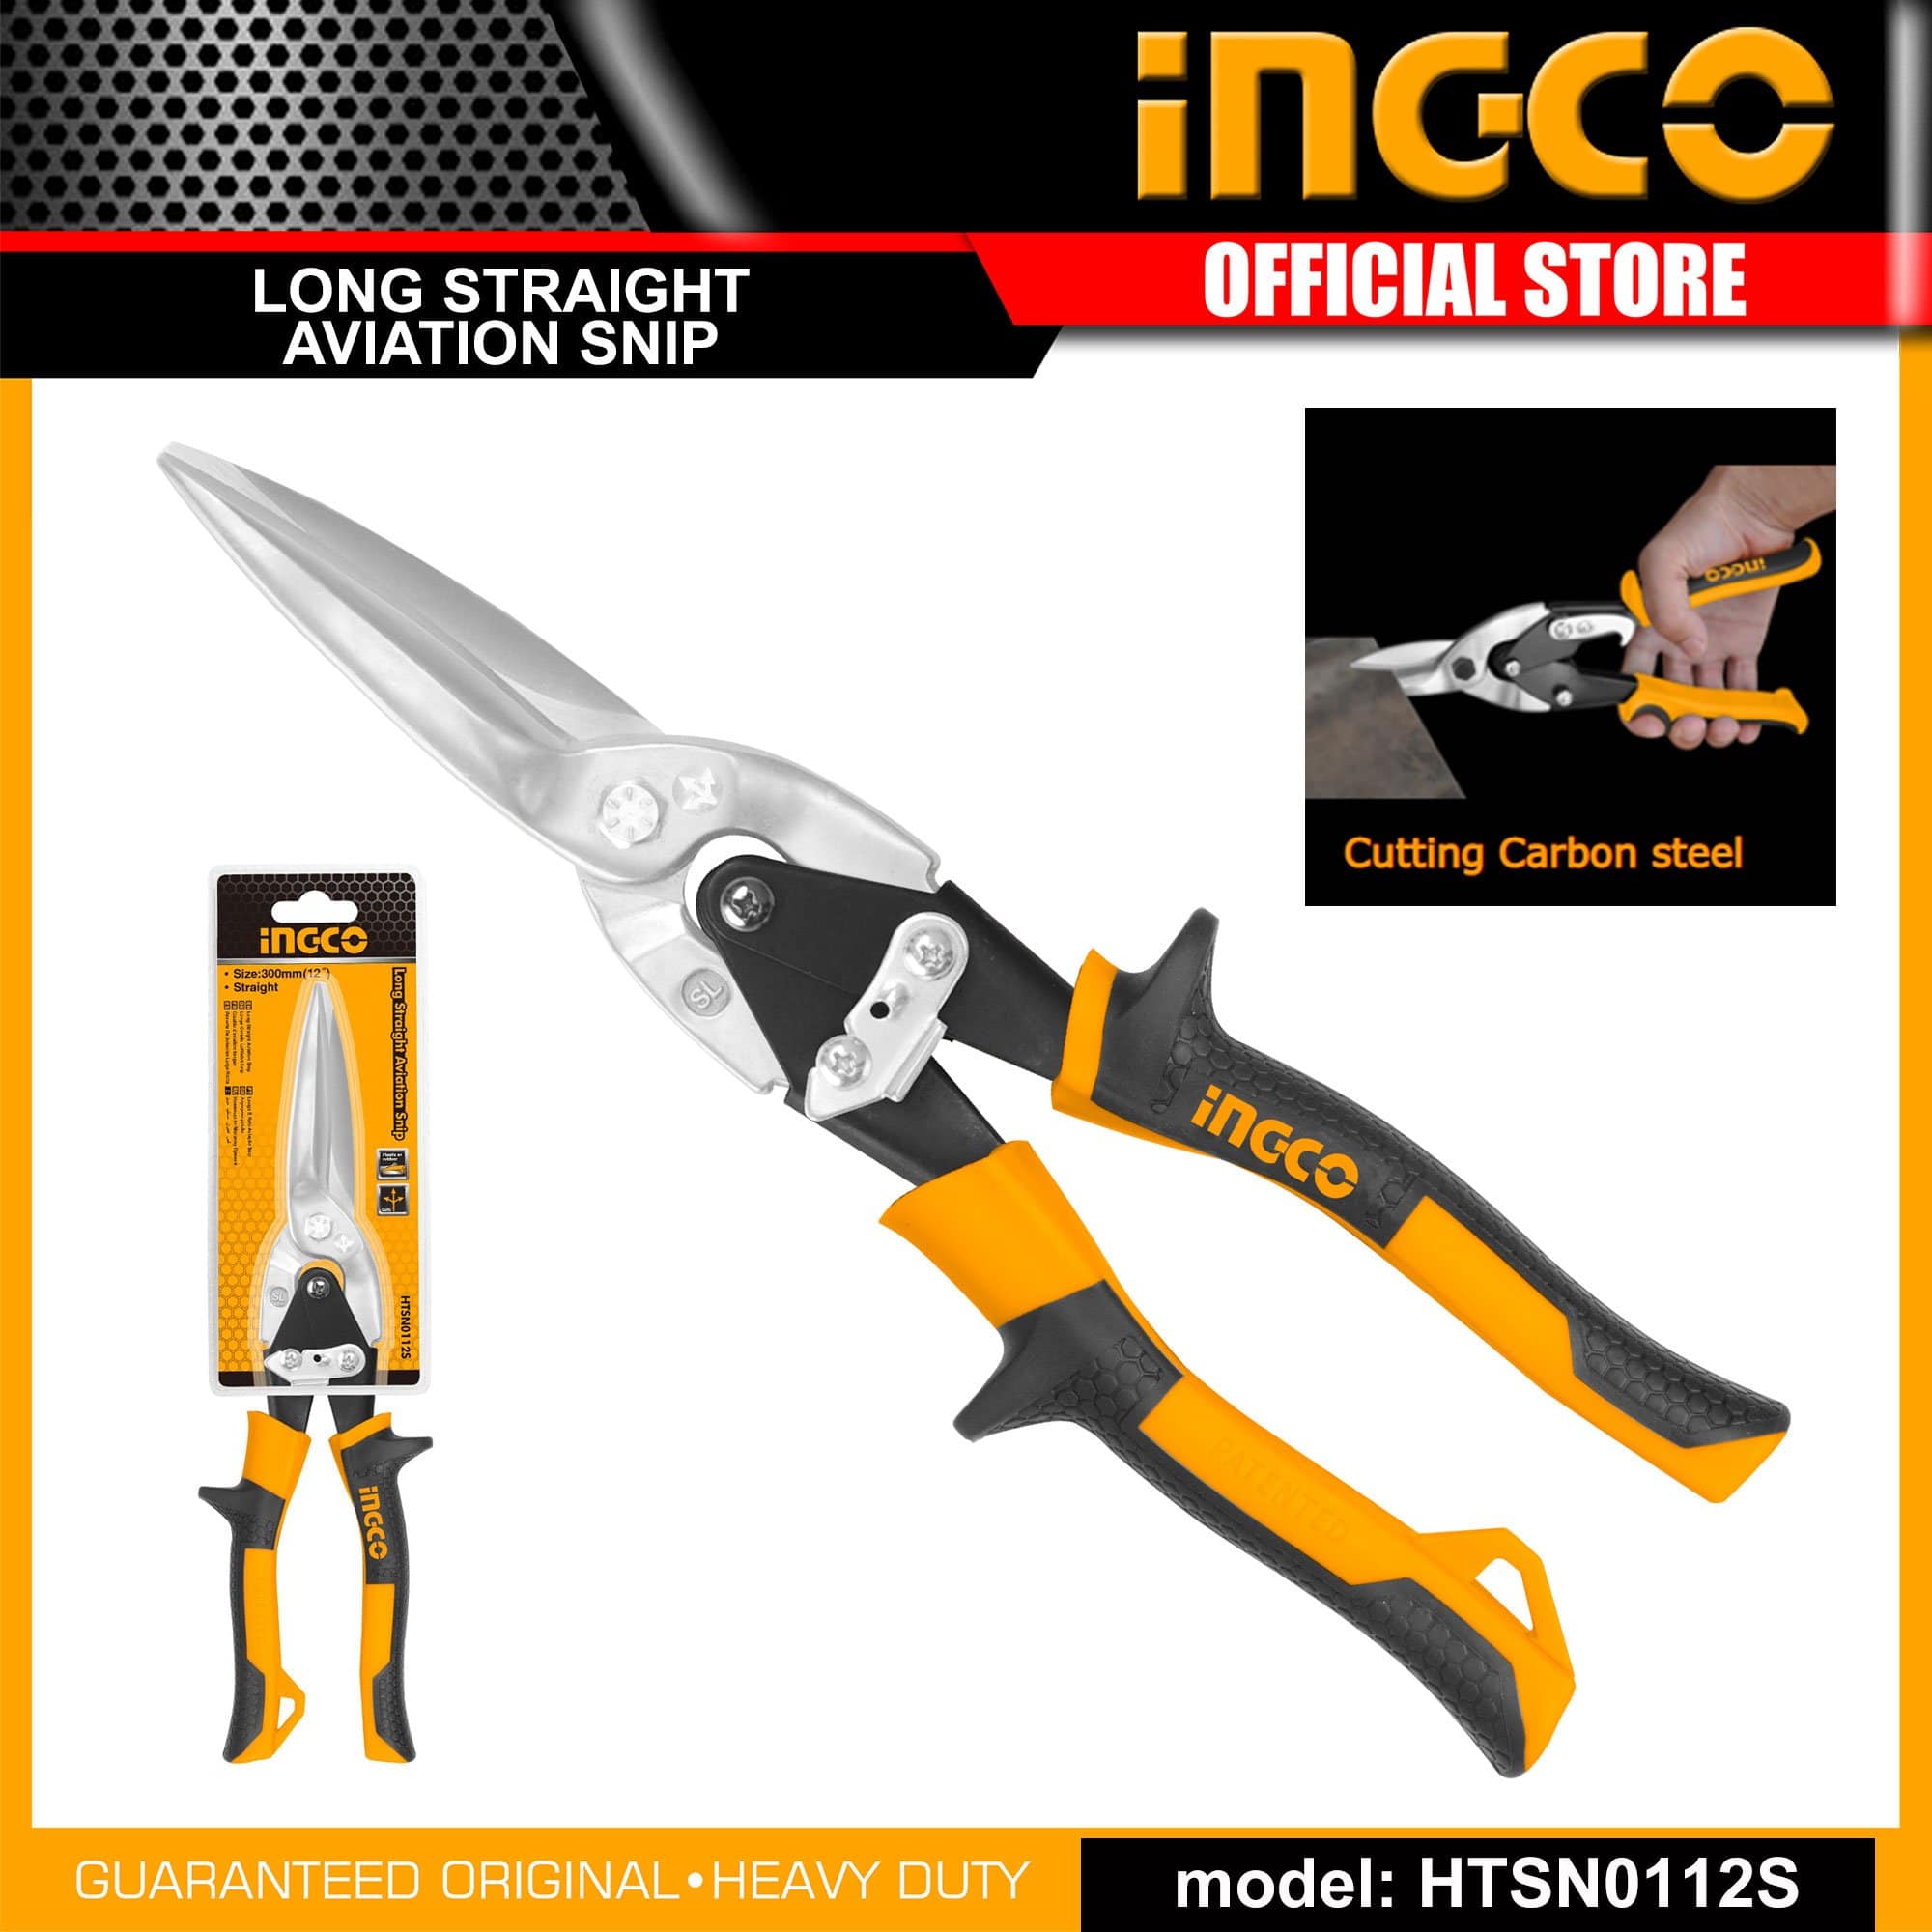 Ingco 12" Straight Aviation Snip - HTSN0112S | Supply Master | Accra, Ghana Tools Building Steel Engineering Hardware tool